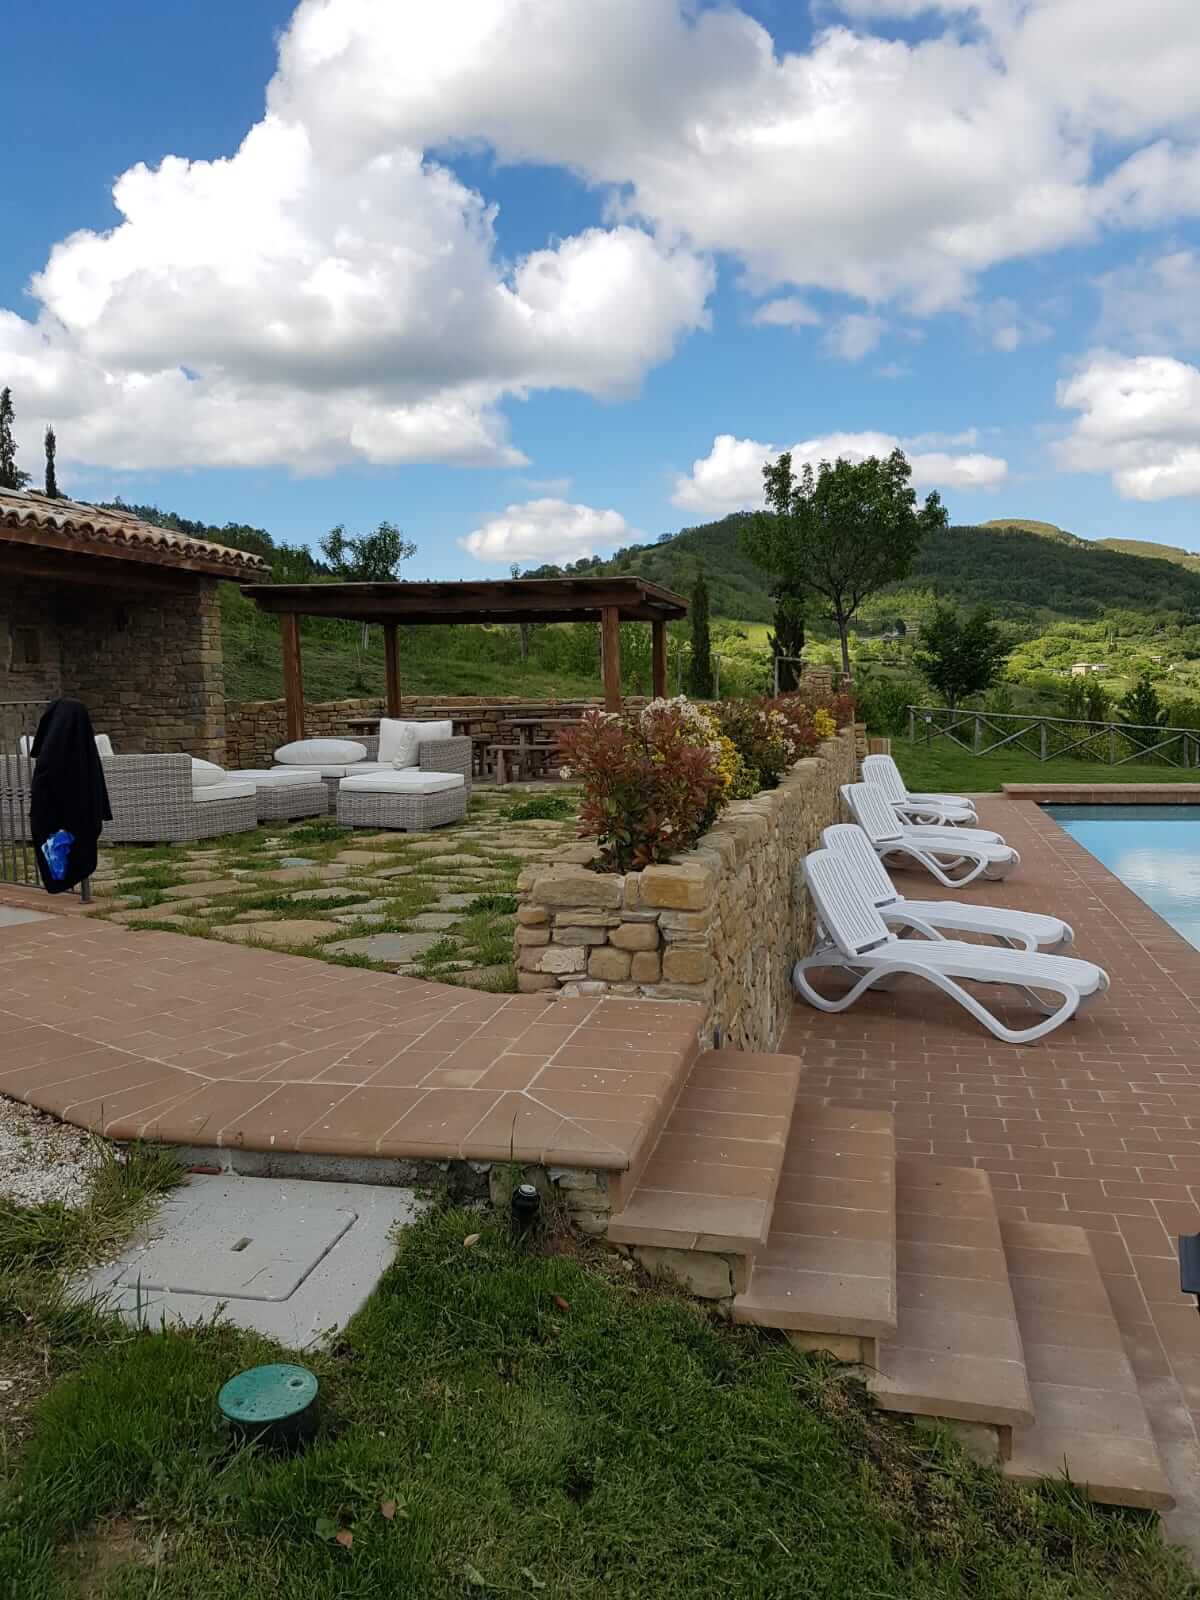 Assisi 4-6 gennaio - La piscina dell'Agriturismo Paradiso44